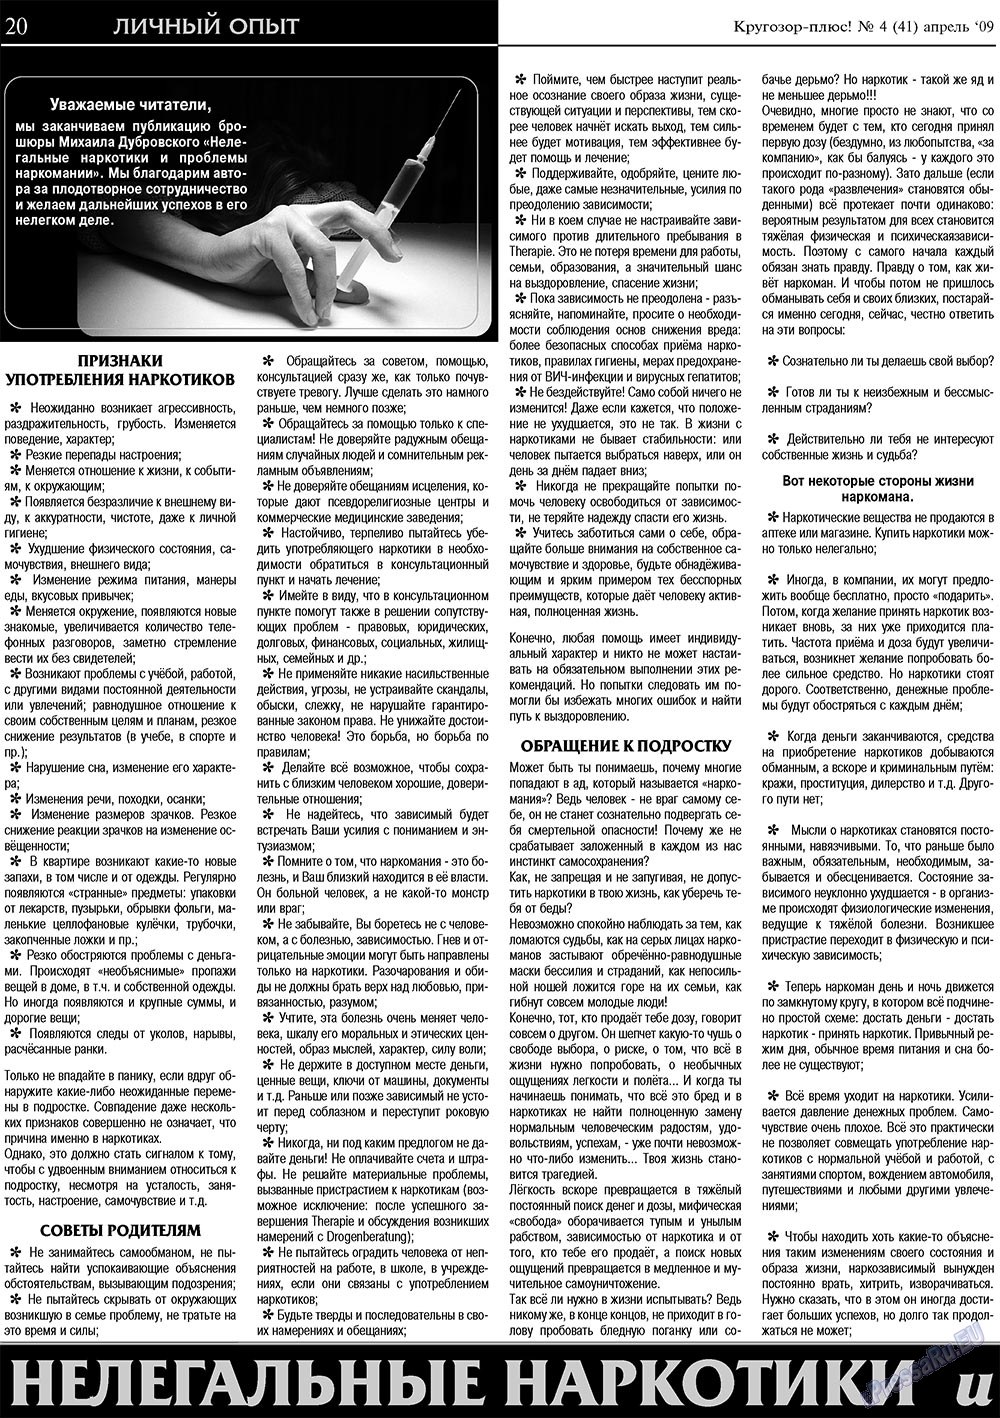 Кругозор плюс! (газета). 2009 год, номер 4, стр. 20